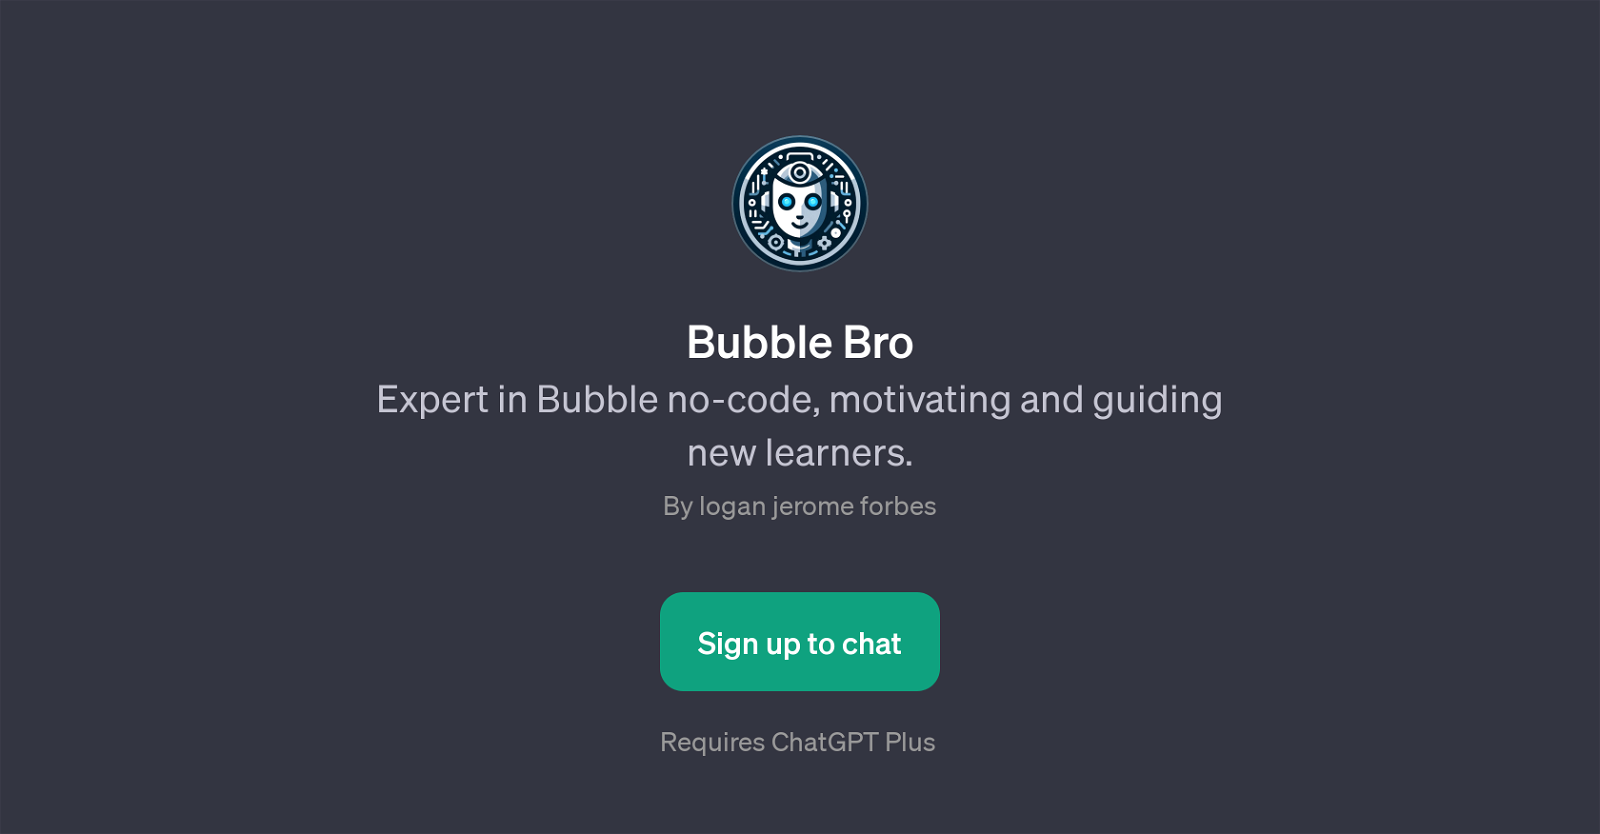 Bubble Bro website